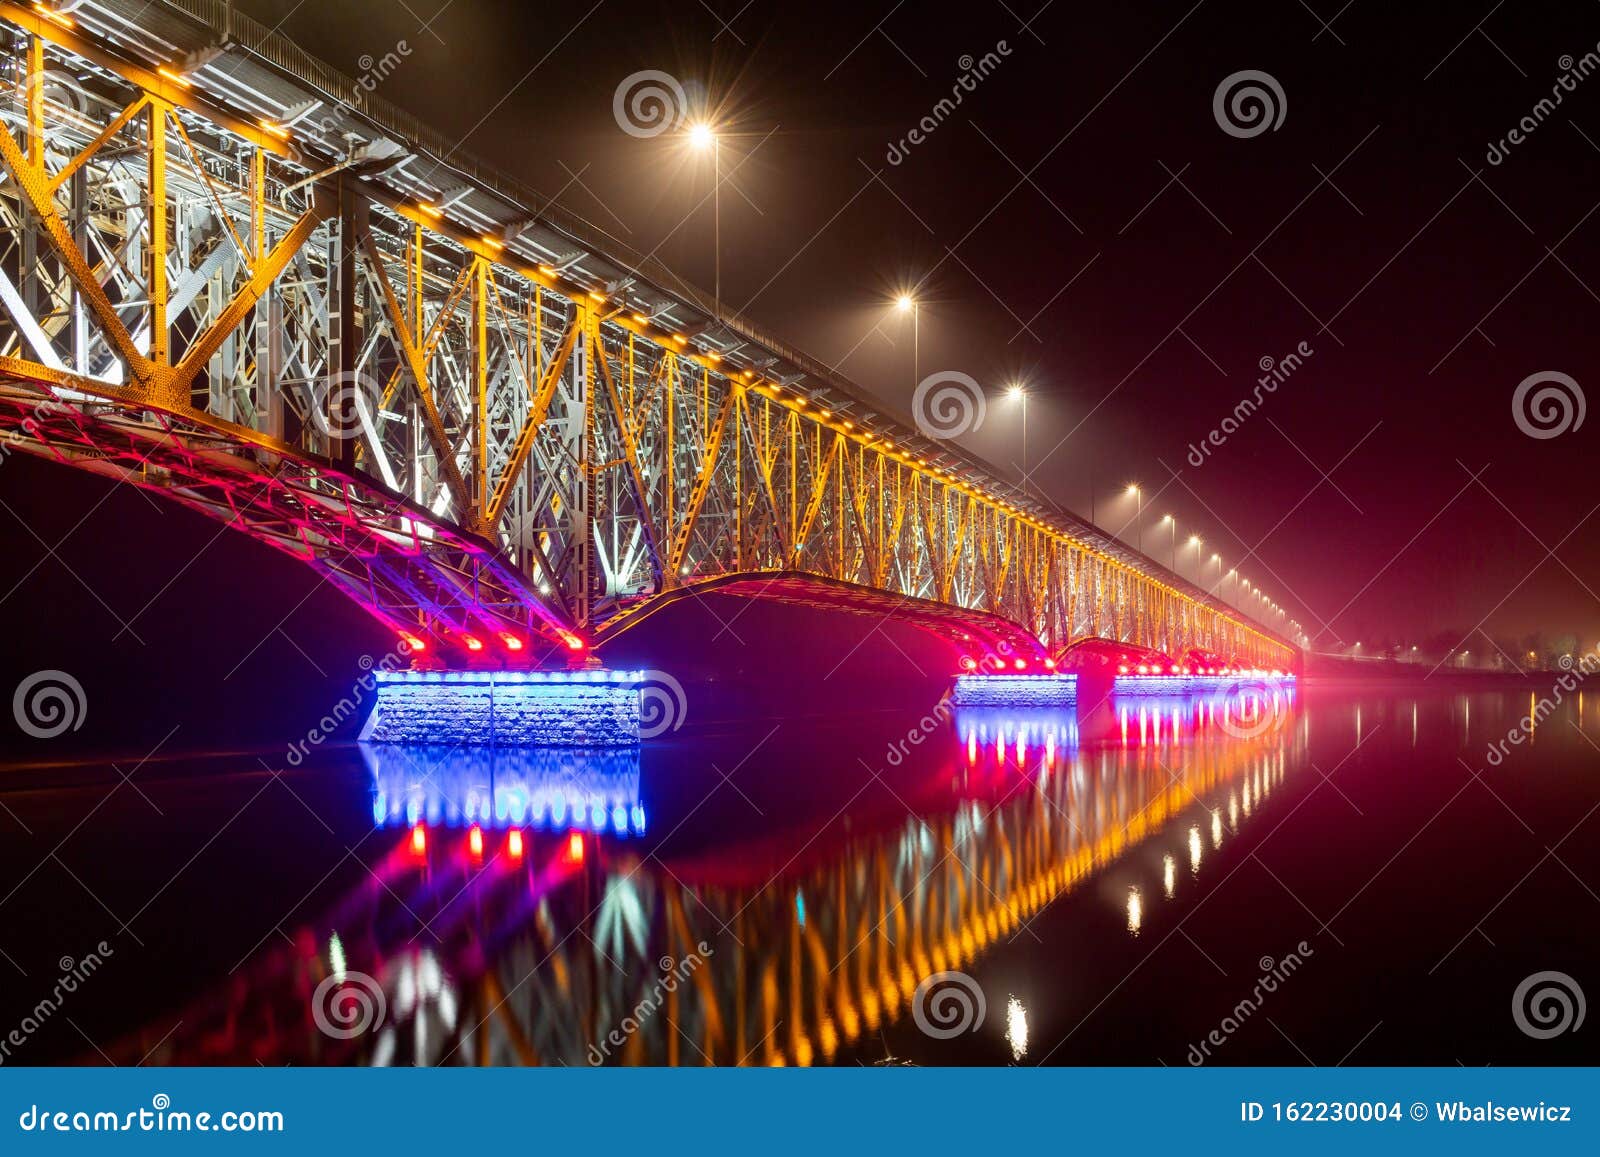 plock, poland - road-railway bridge over the vistula wisla river in illuminated at night